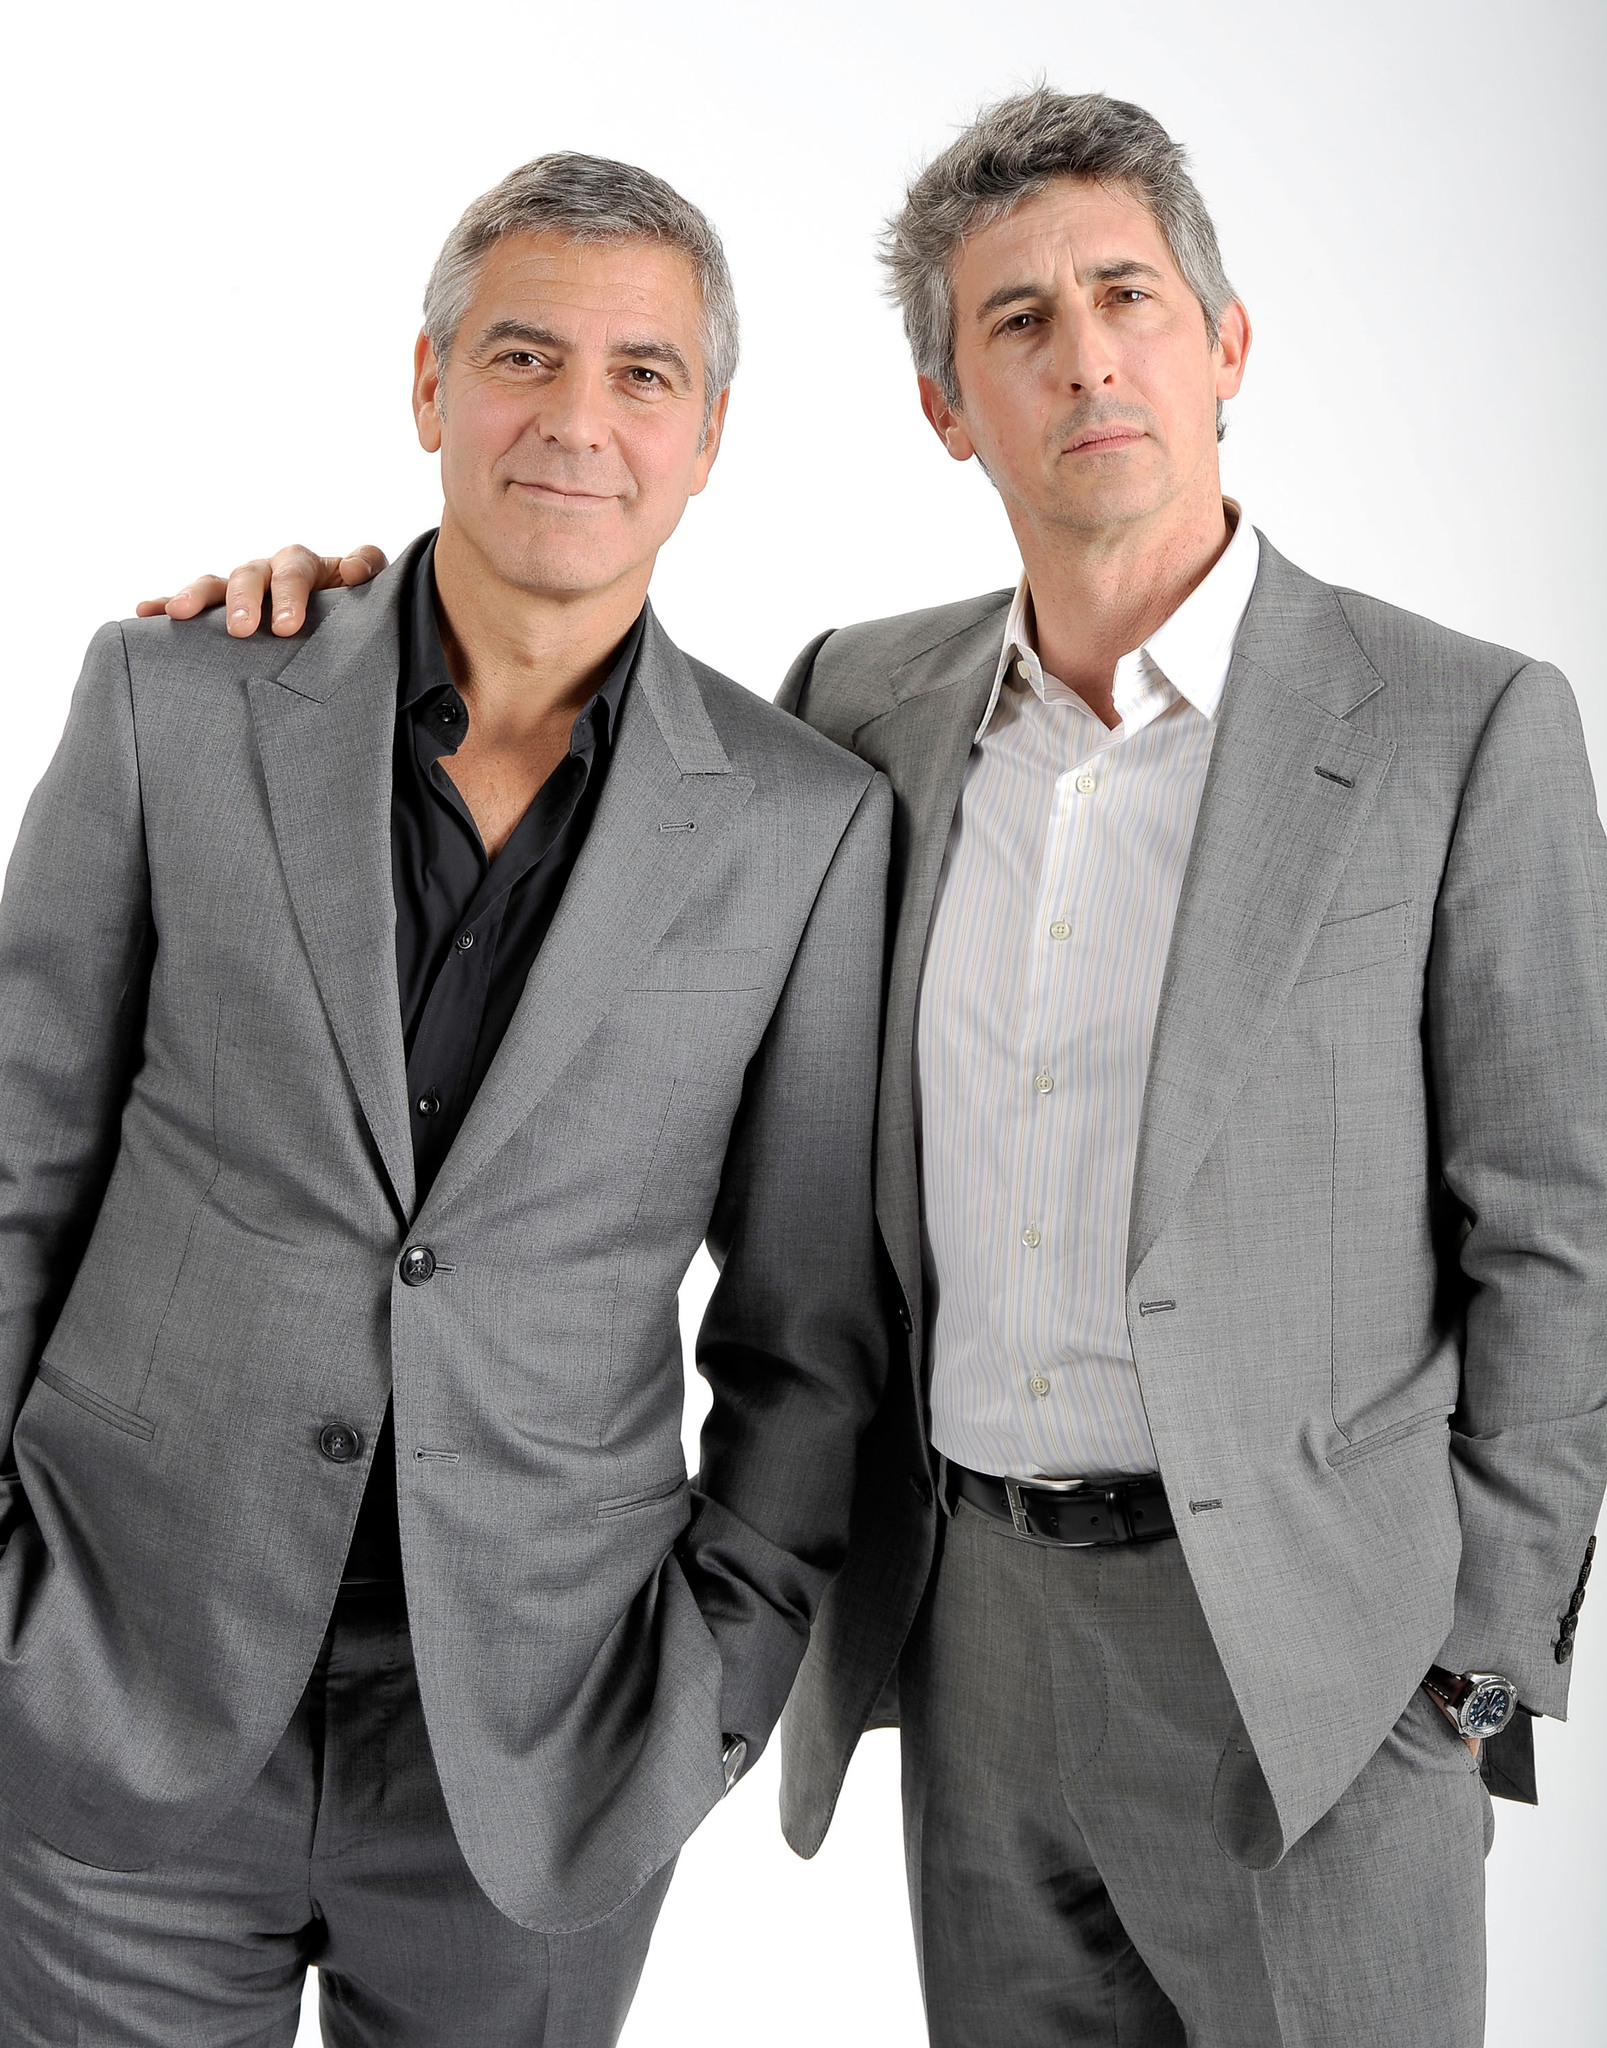 George Clooney and Alexander Payne